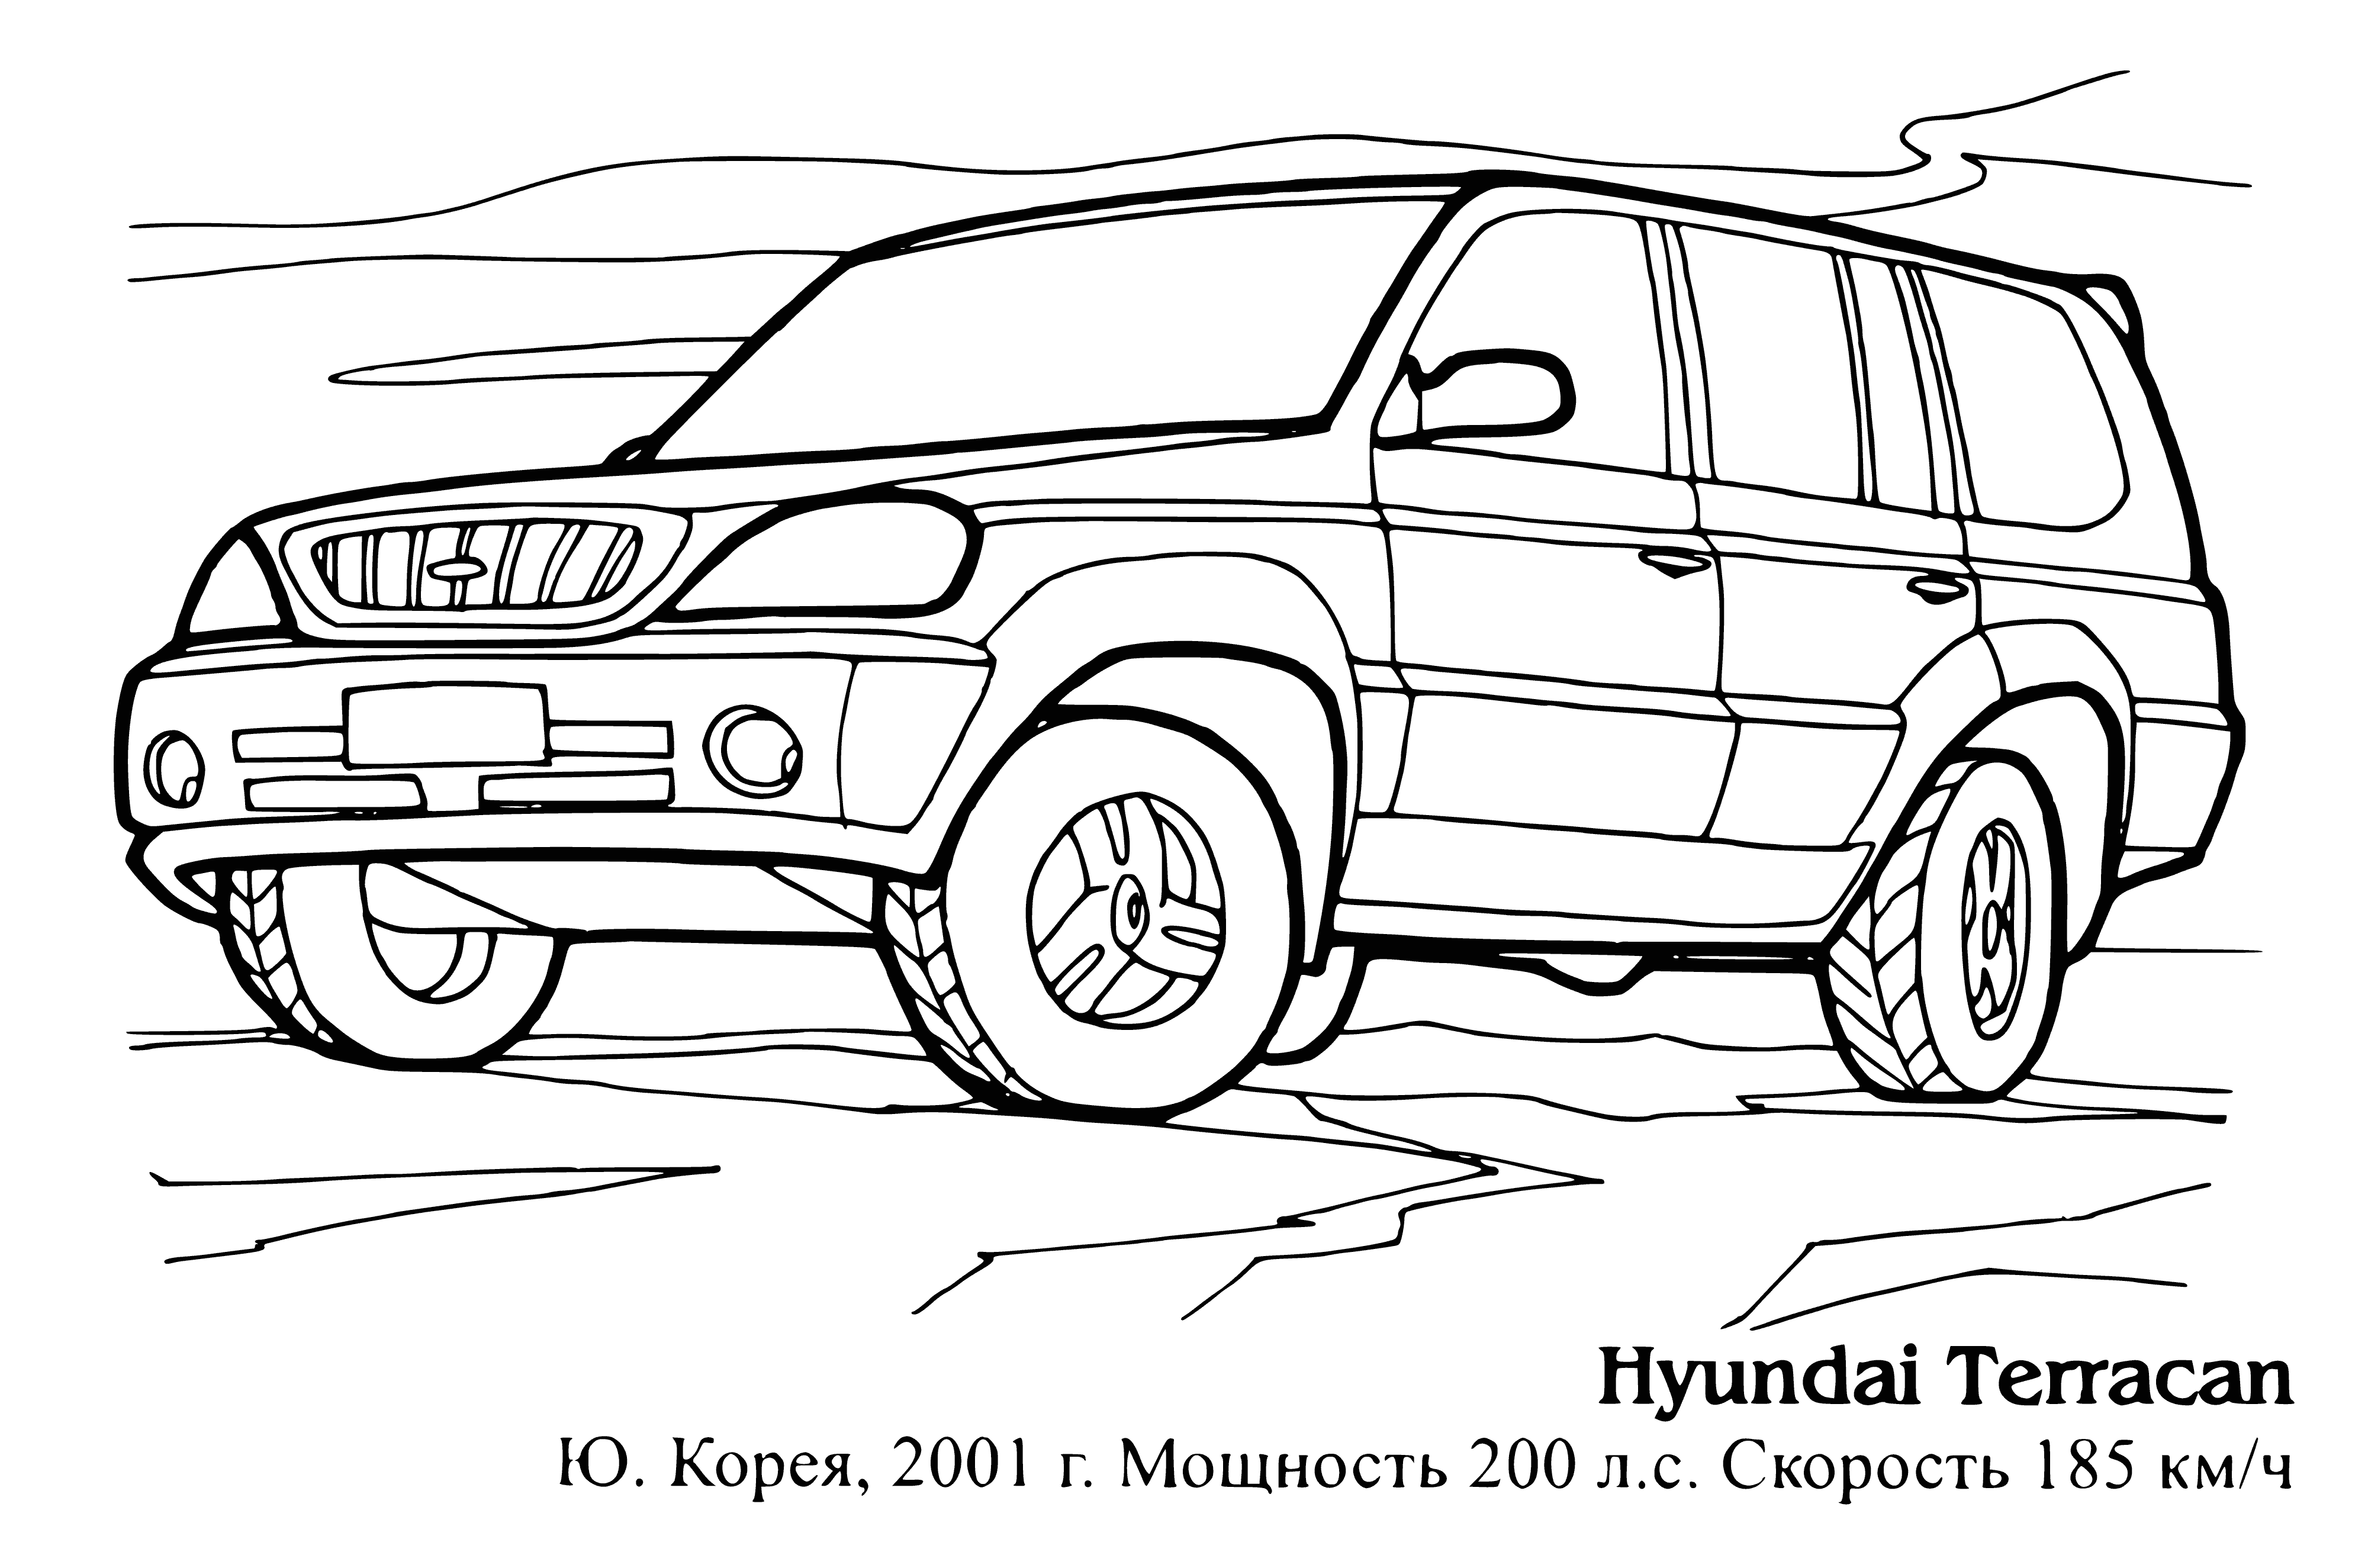 Hyundai Terracan coloring page